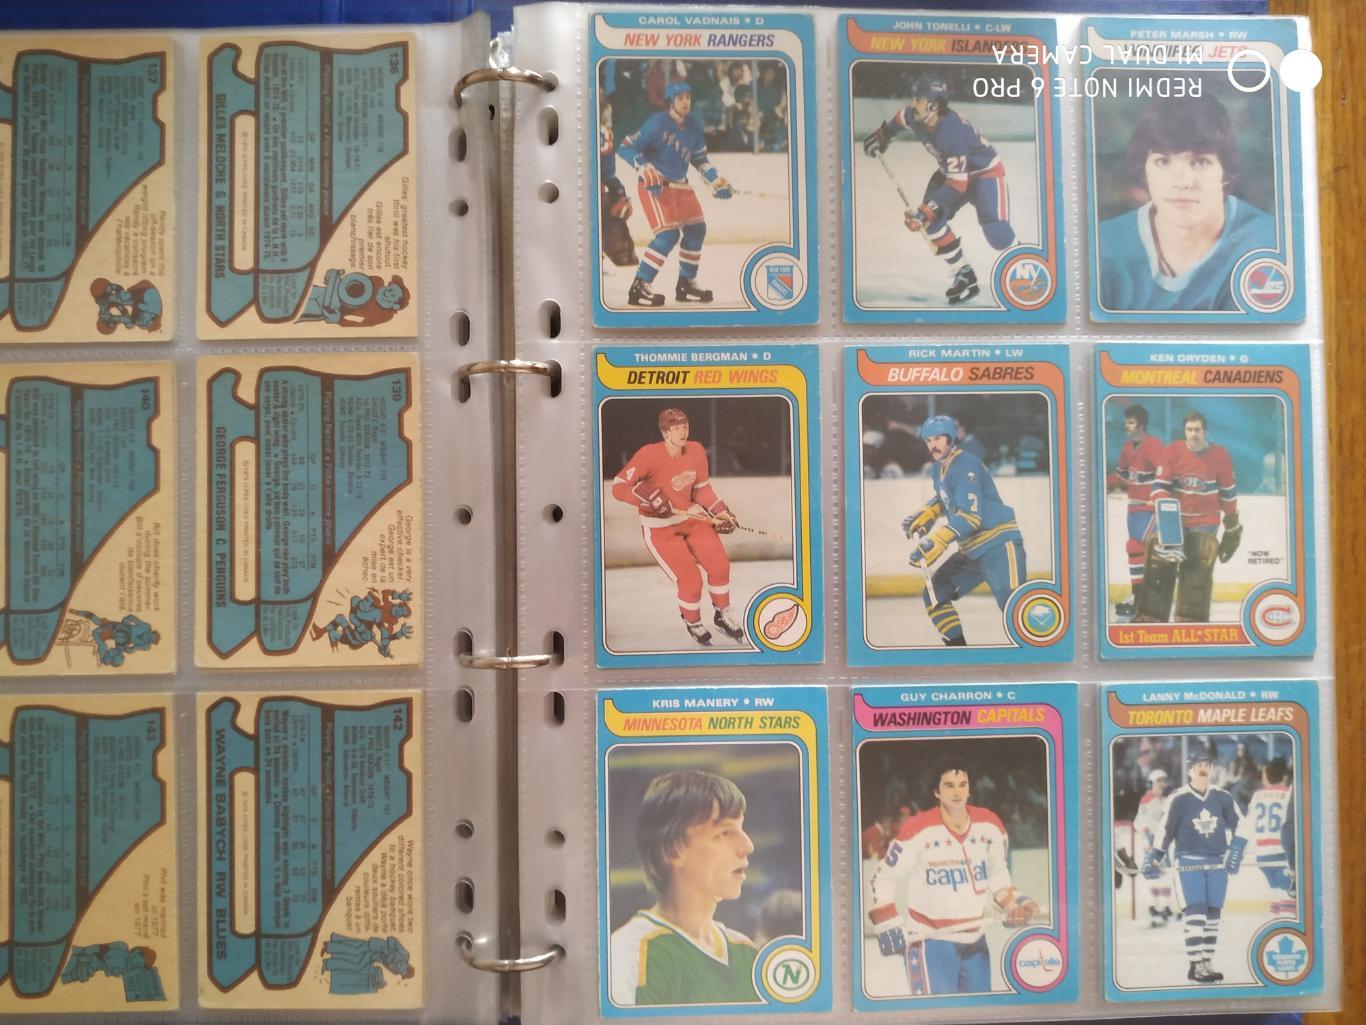 Набор Карточек НХЛ NHL 1979-80 OPC HOCKEY CARD #1-396 WAYNE GRETZKY ROOKIE CARD 3